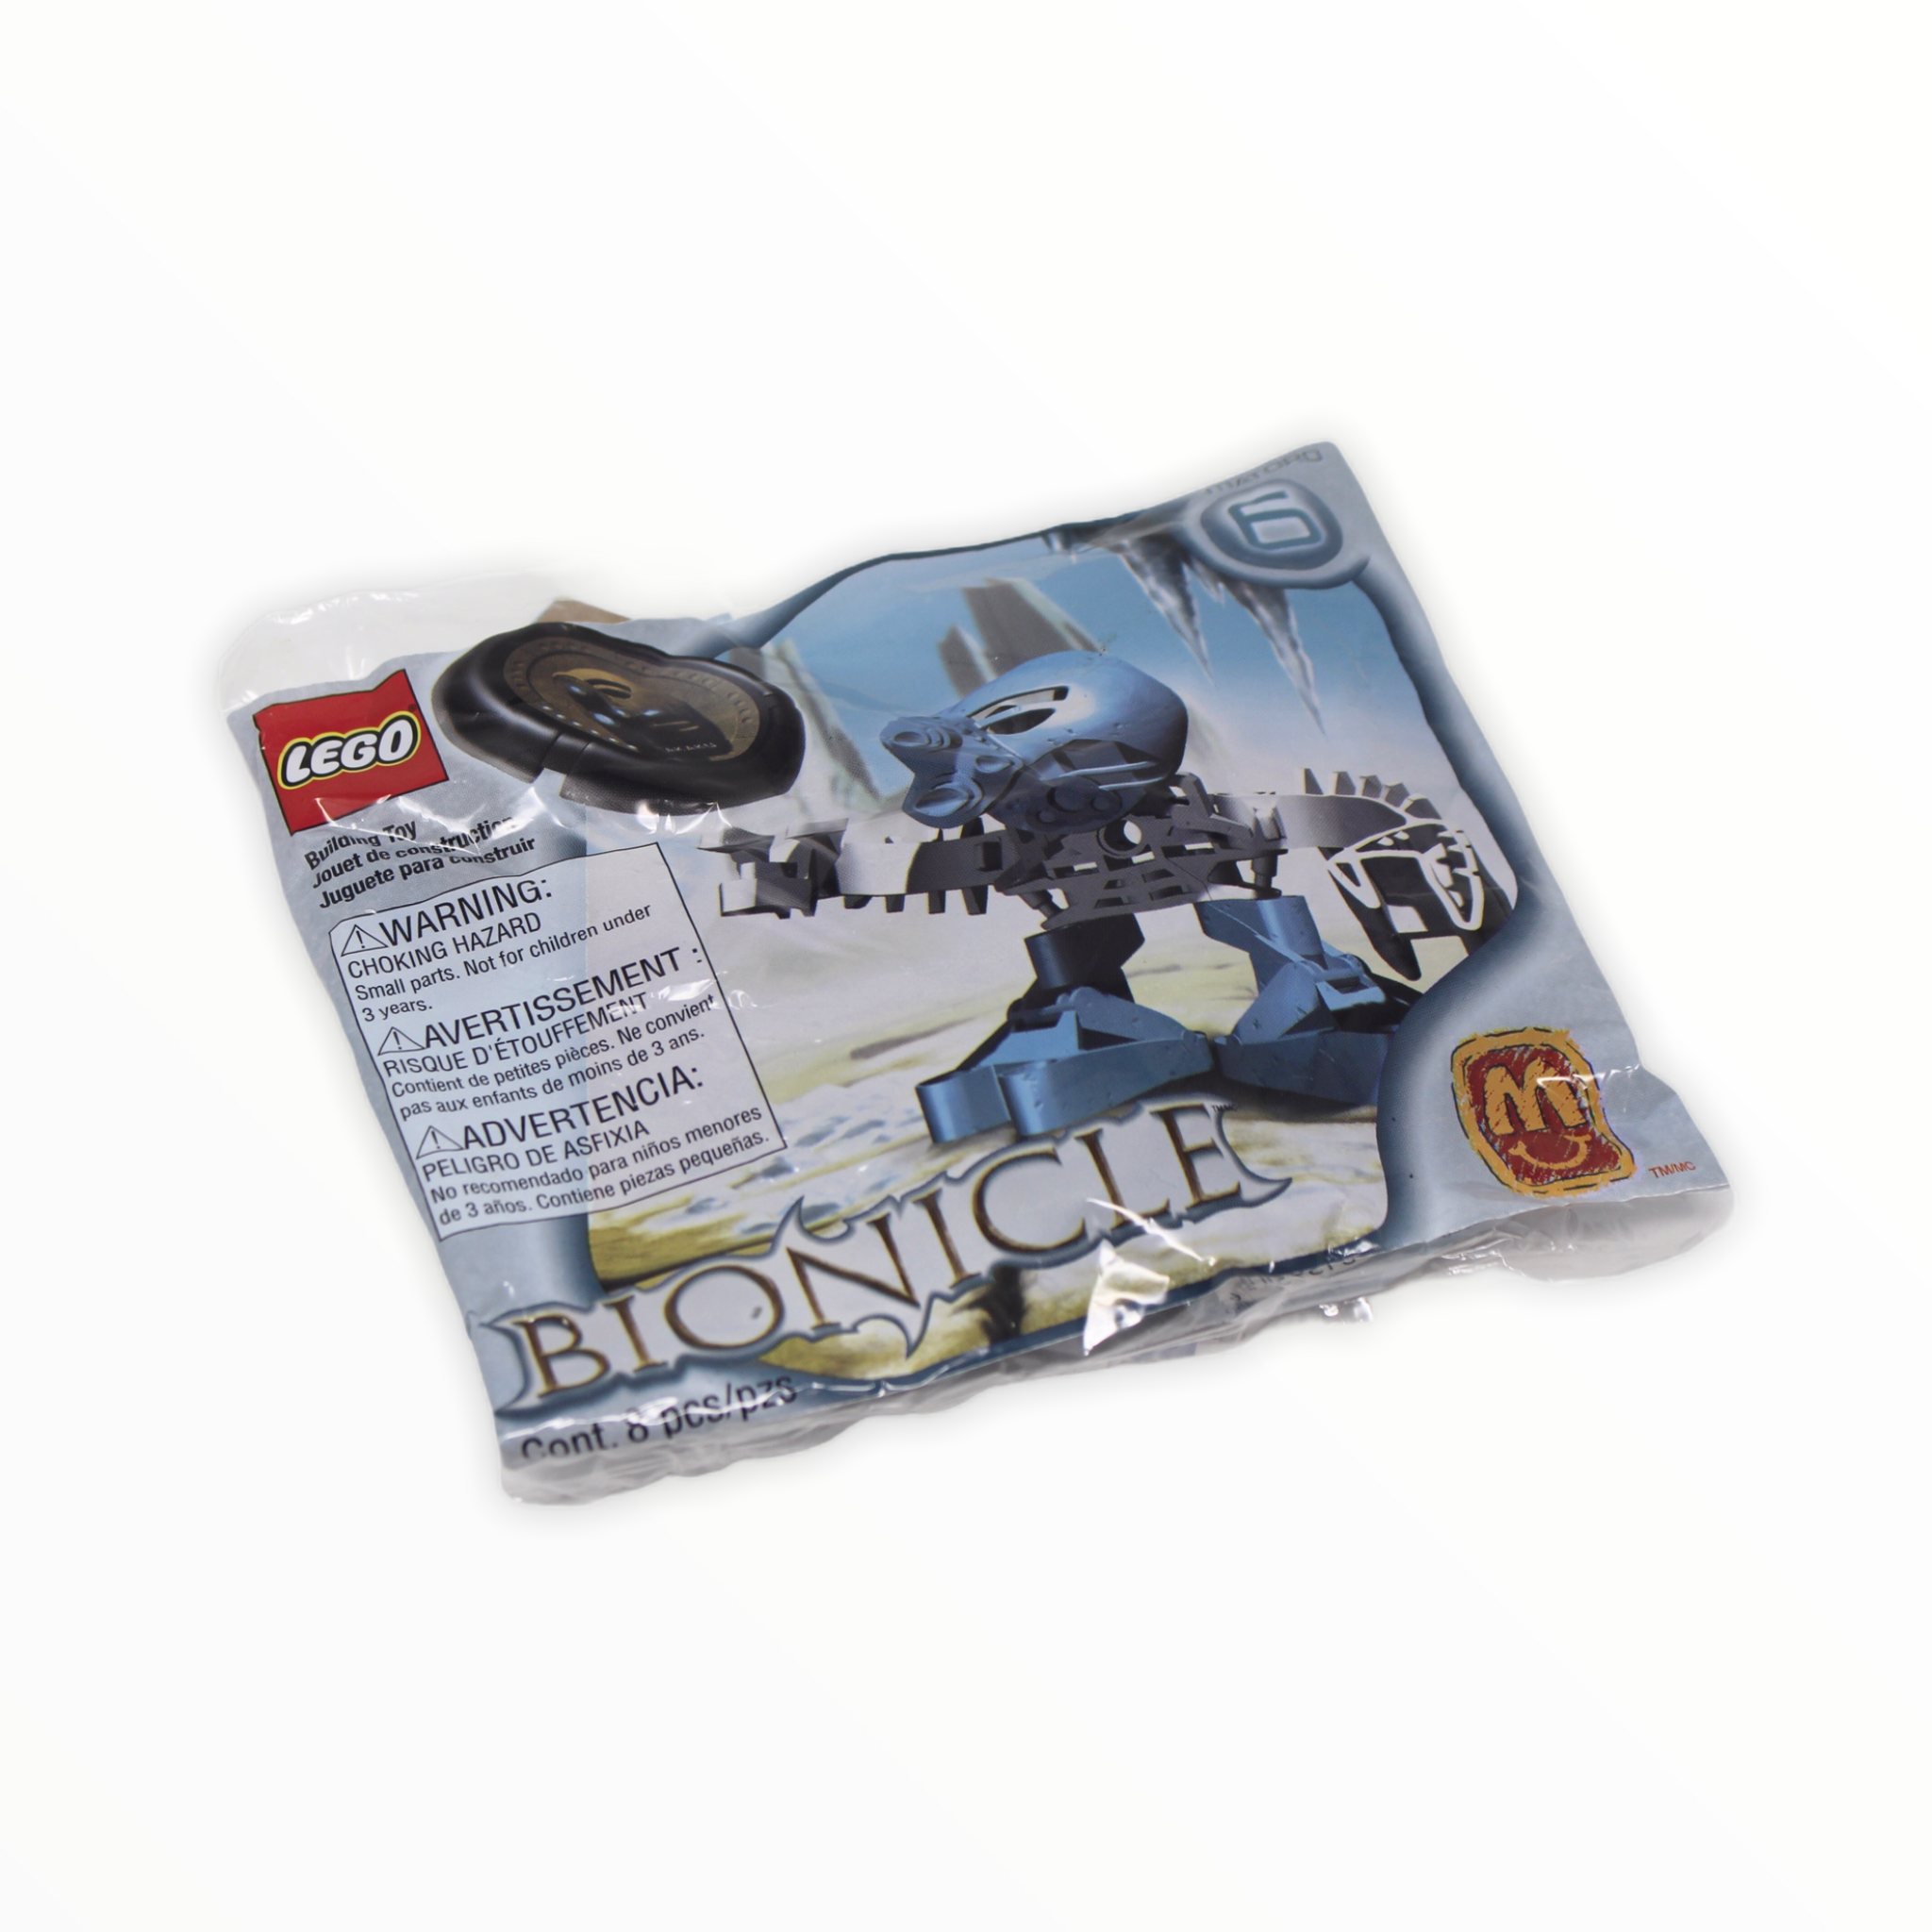 Polybag 1393 Bionicle Matoro